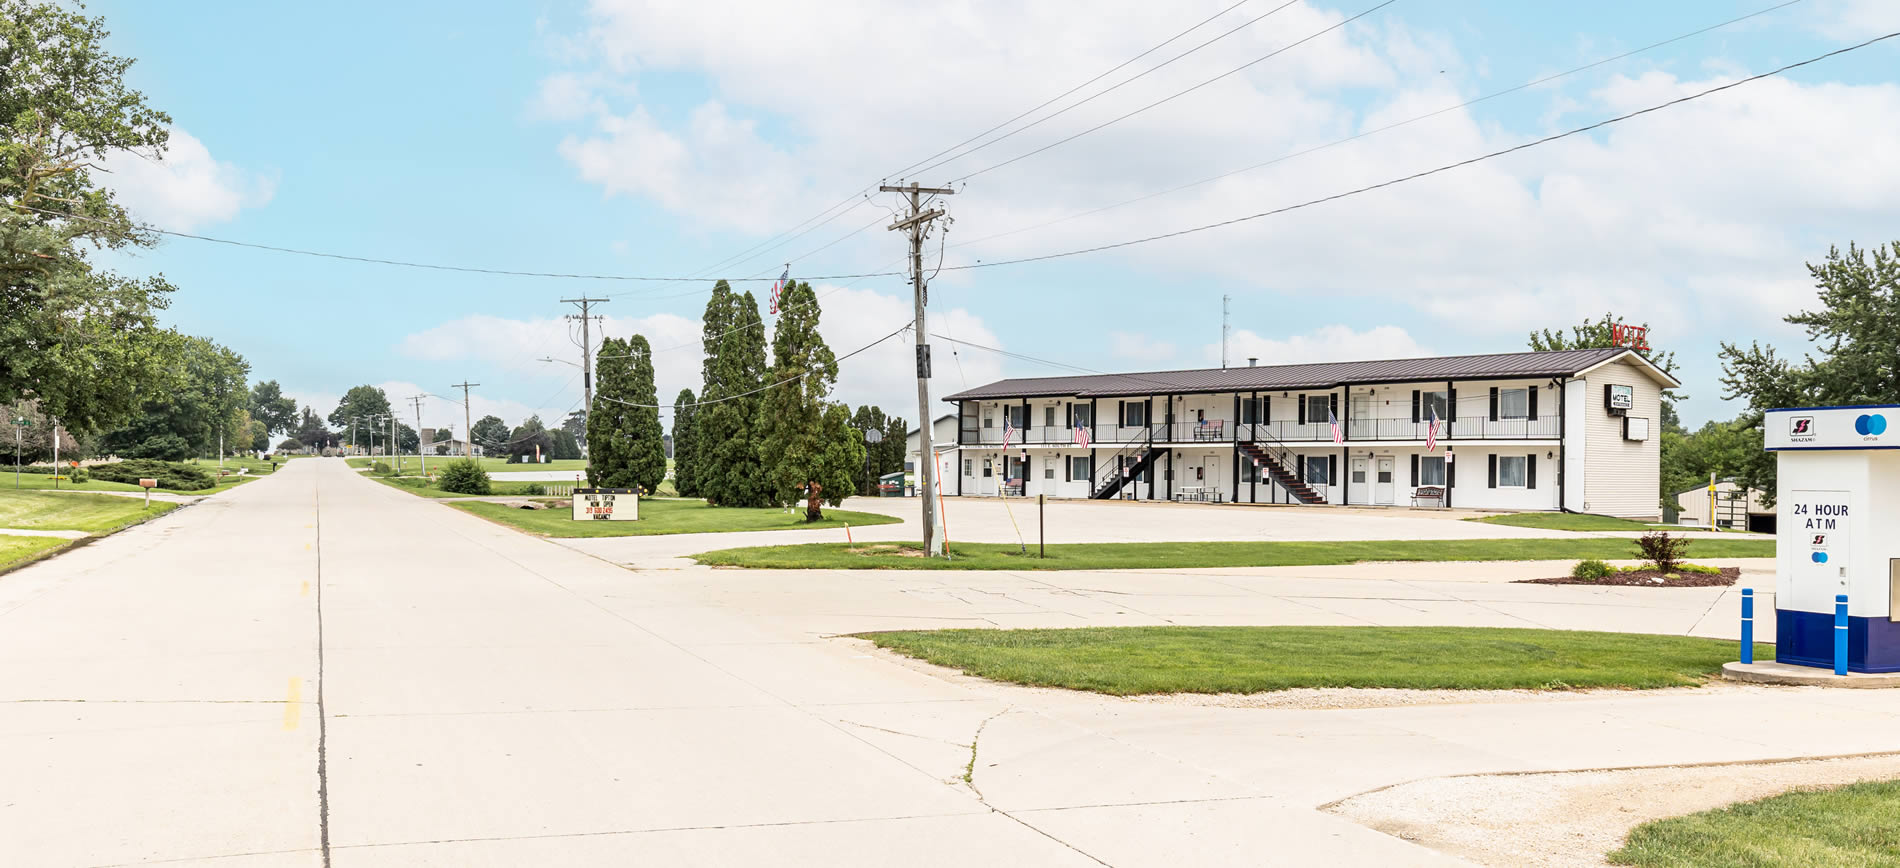 Motel Tipton, Contact & Map Tipton Iowa County seat of Cedar County